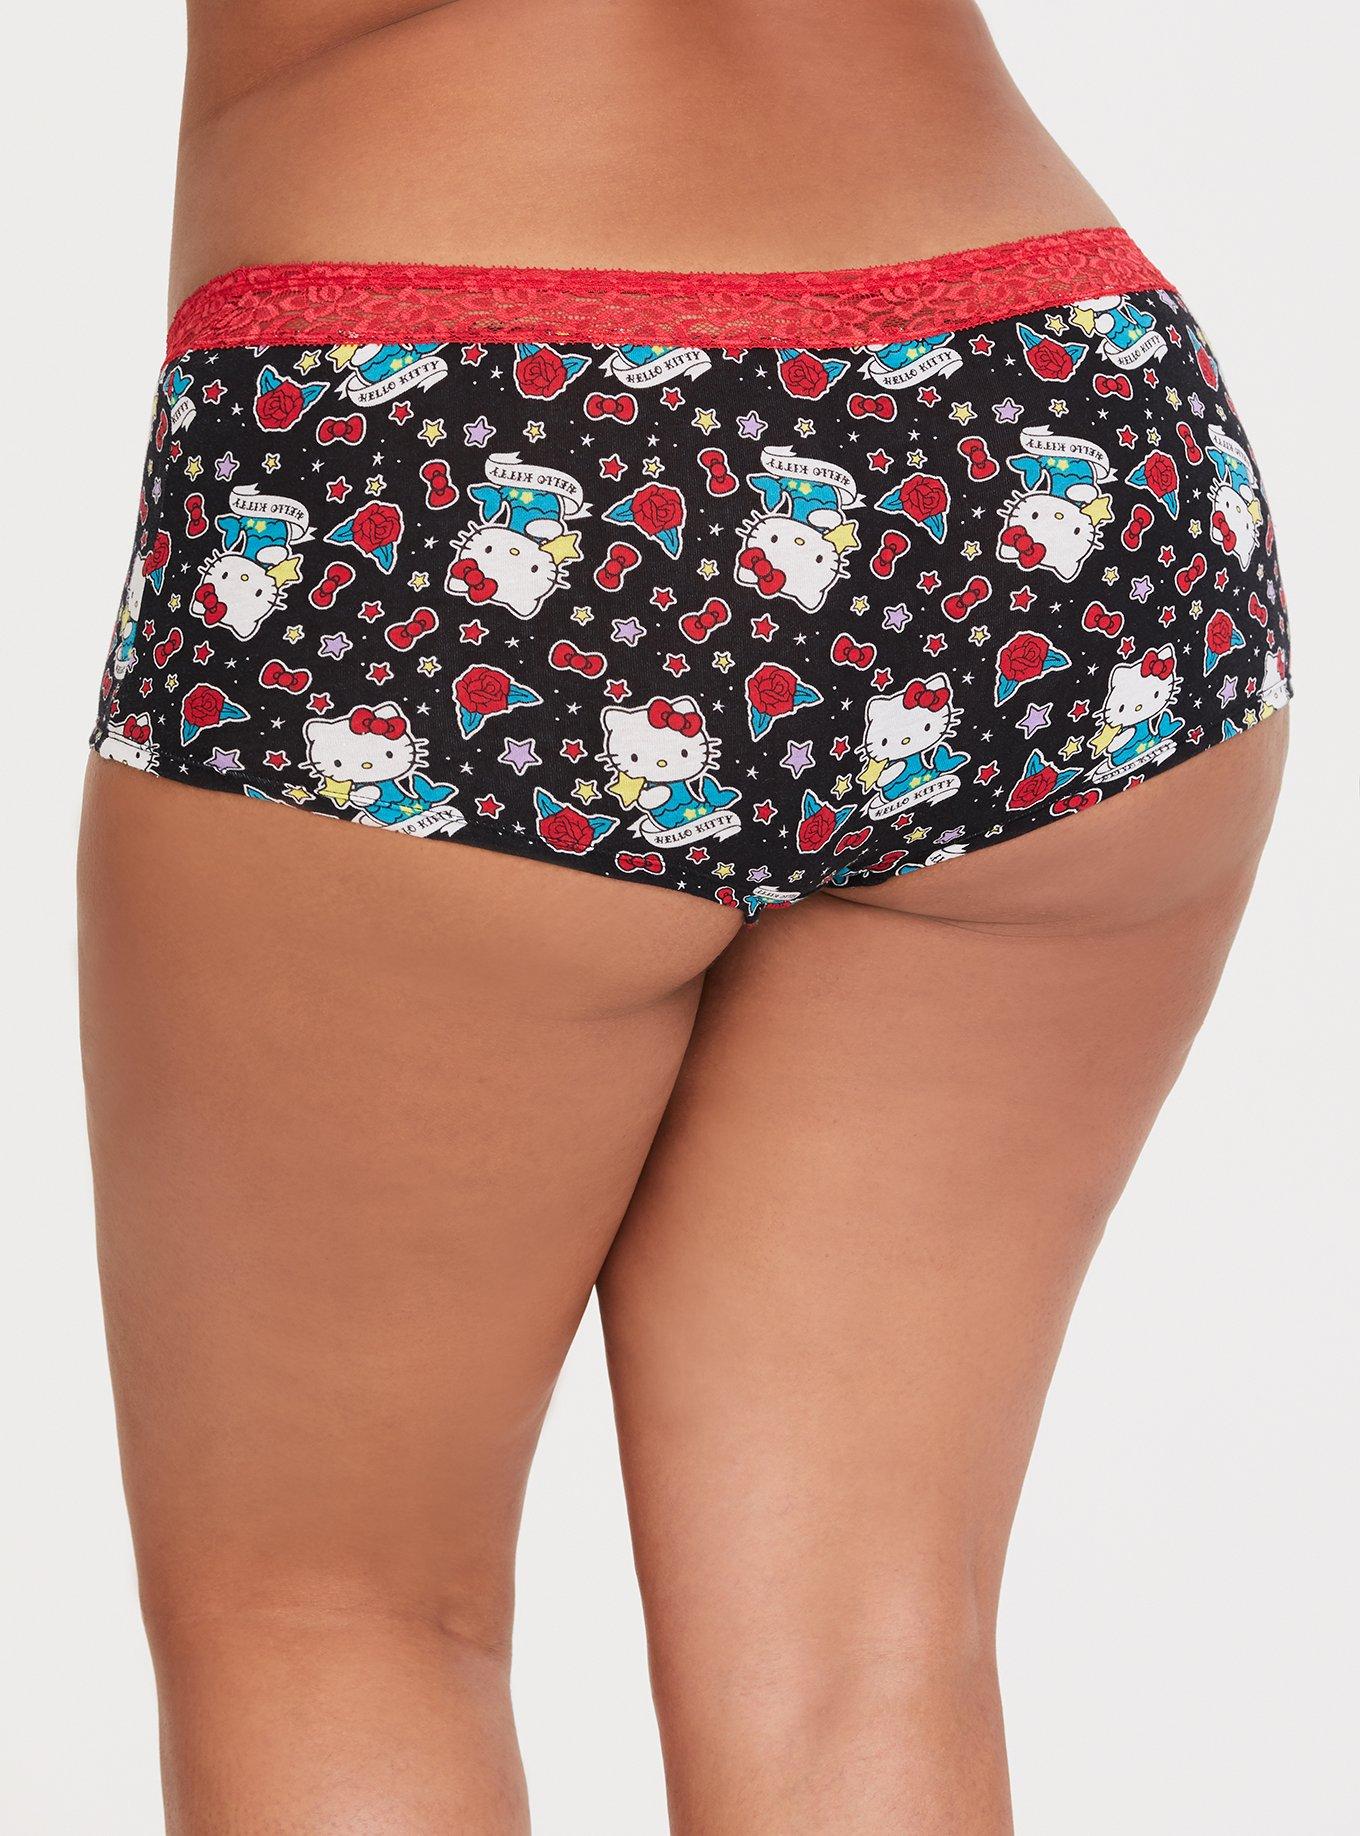 Sanrio Hello Kitty Underwear Panties Briefs Knickers Sanitary Shorts M Size